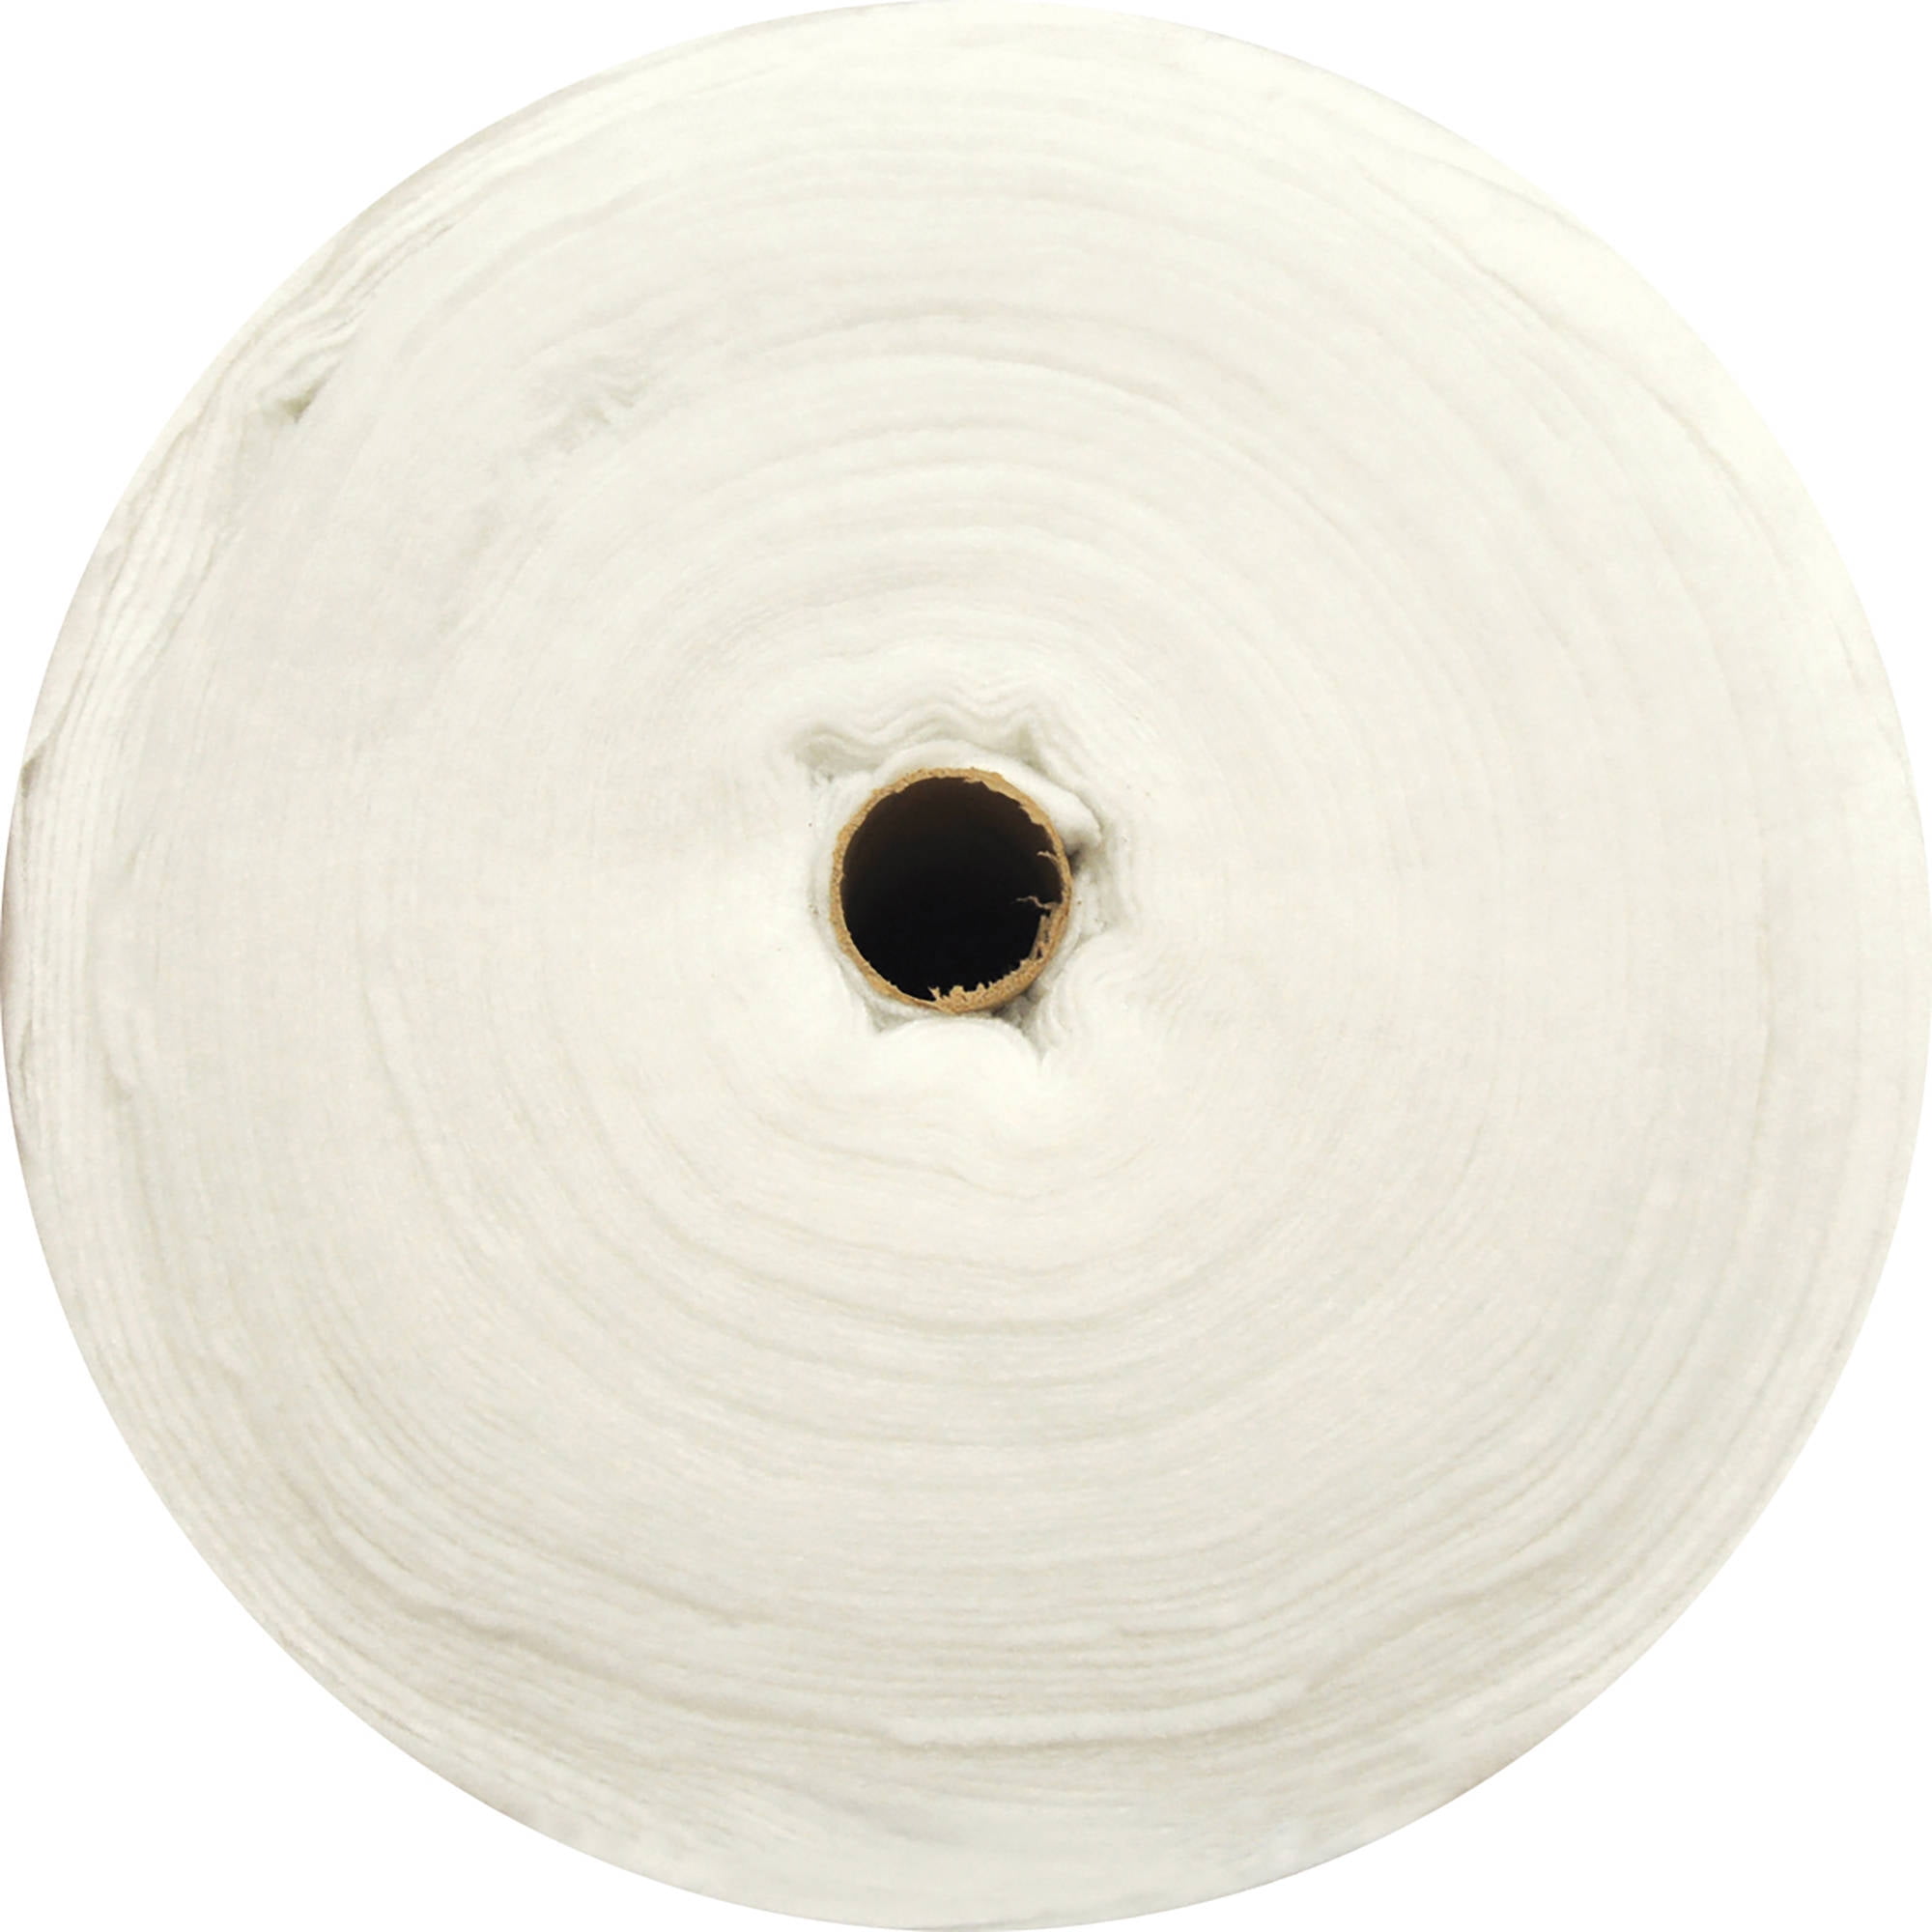 Warm & White Needled Cotton Batting (120'' x 124'') King Size 